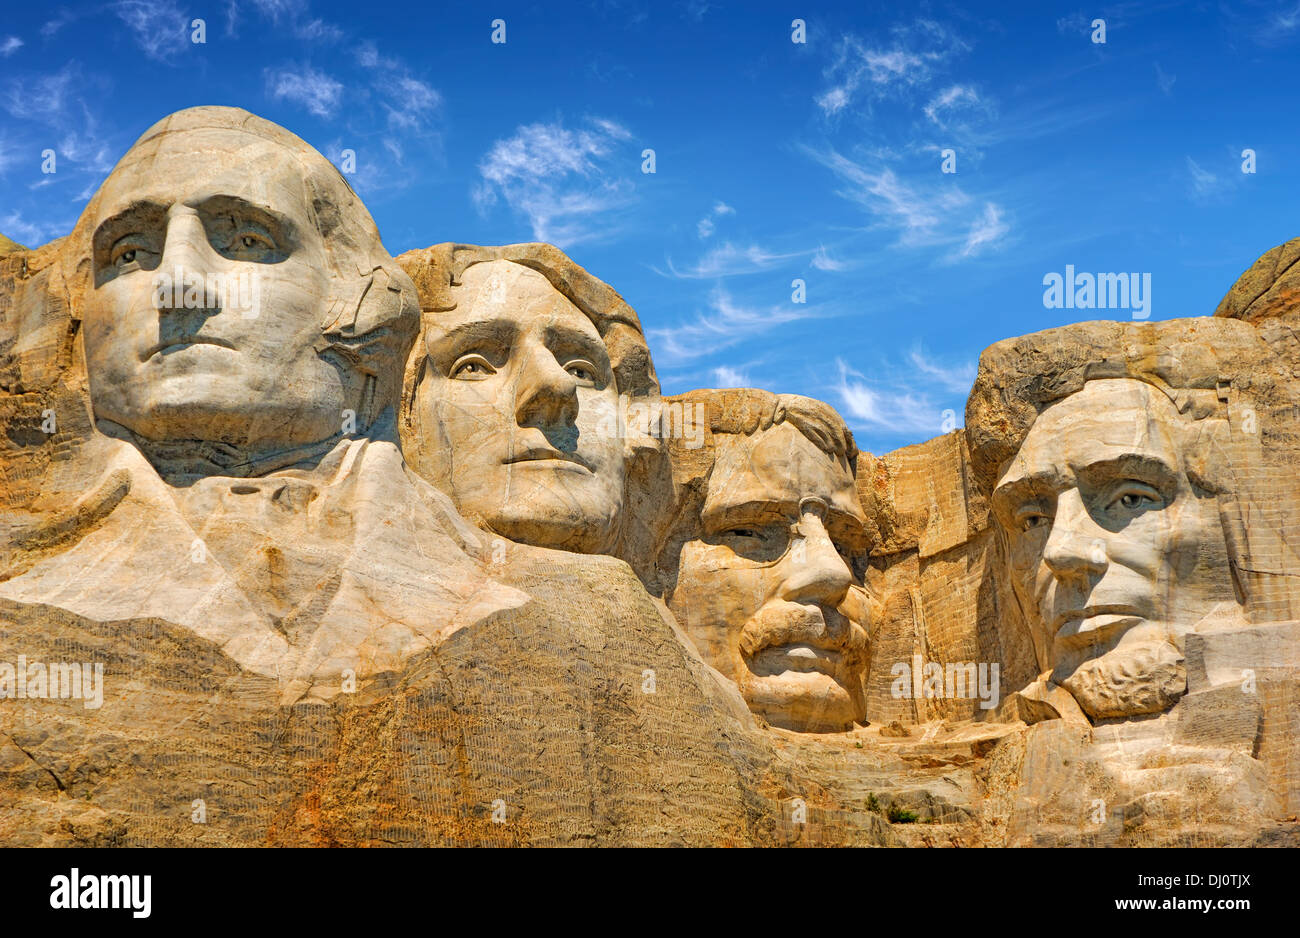 Schnitzen begann am erstaunlichen Mount Rushmore National Memorial in 1927 am Mount Rushmore, South Dakota, USA. Stockfoto